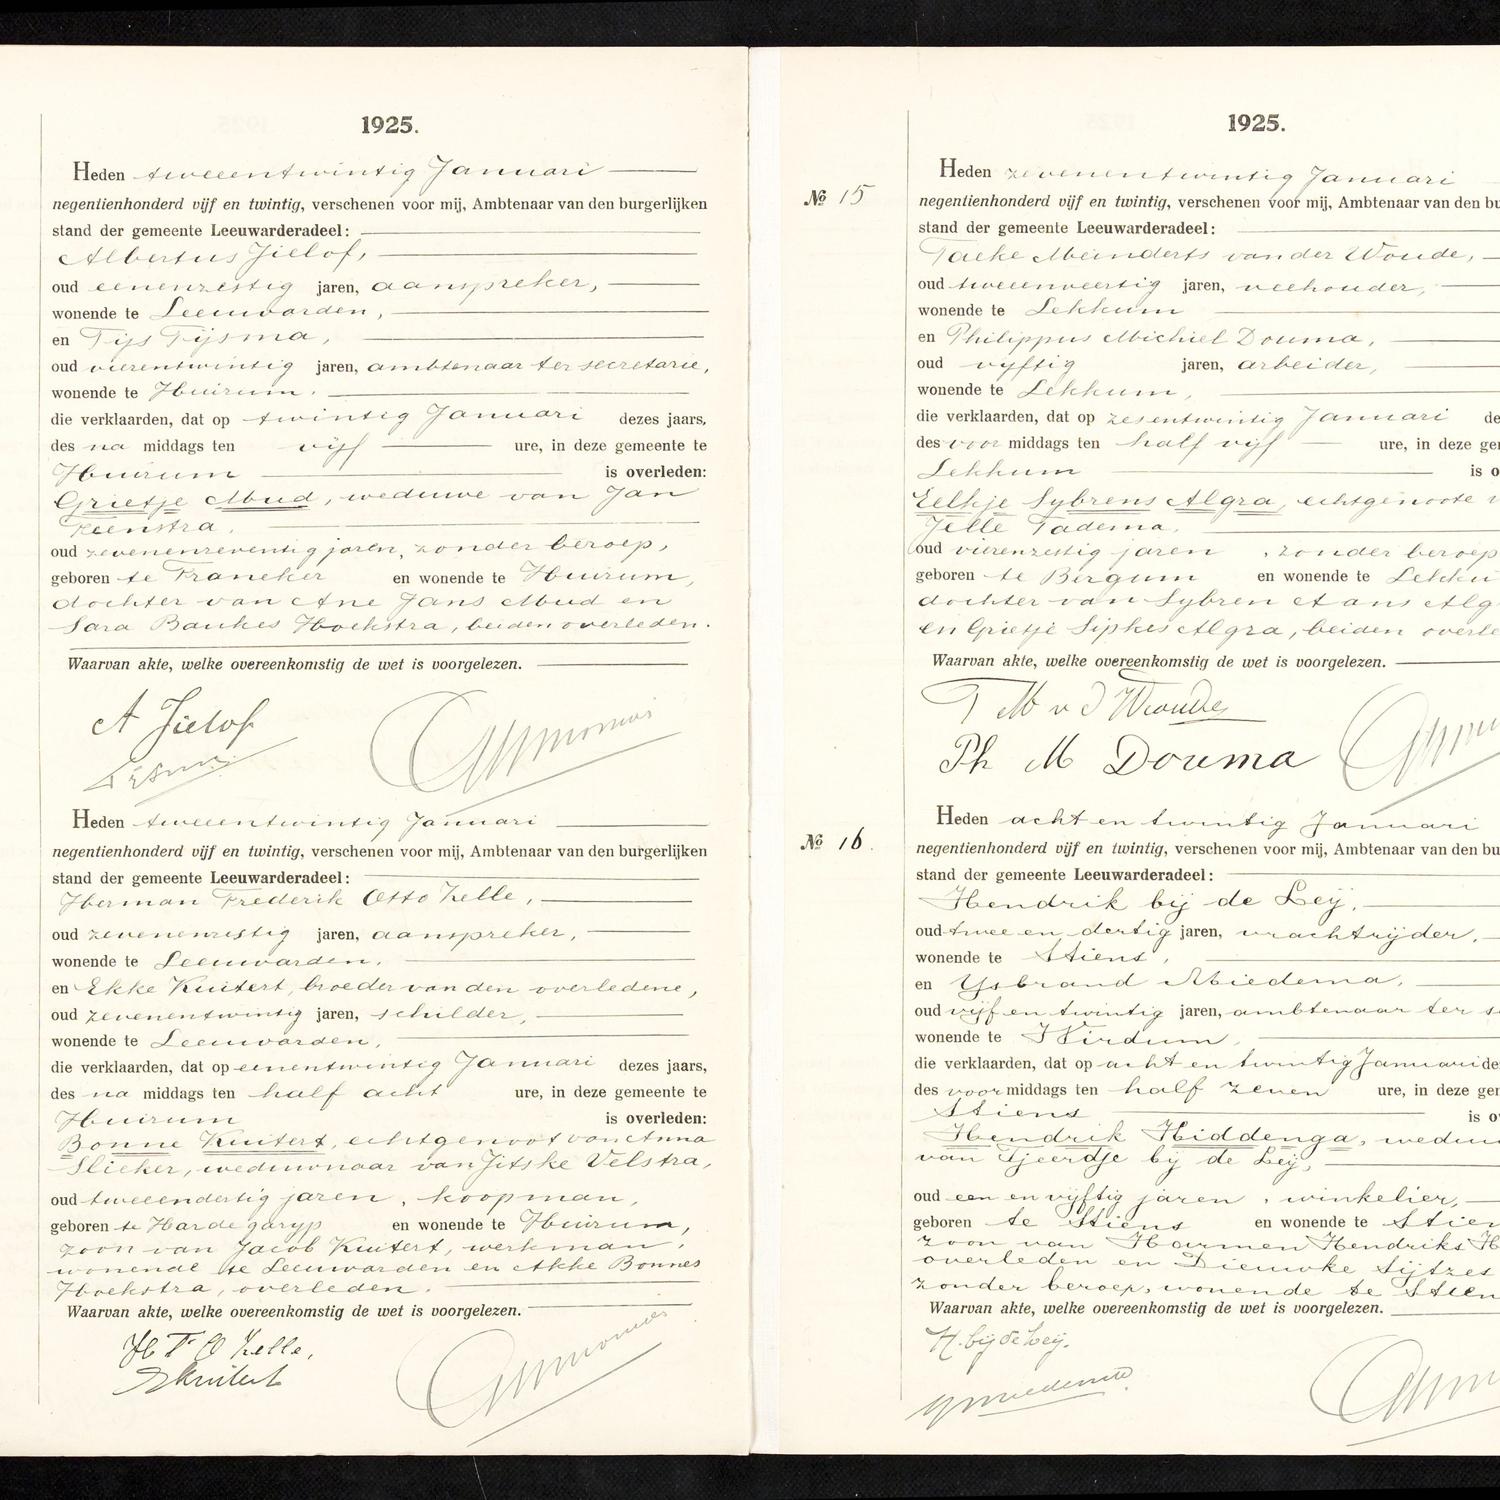 Civil registry of deaths, Leeuwarderadeel, 1925, records 13-16